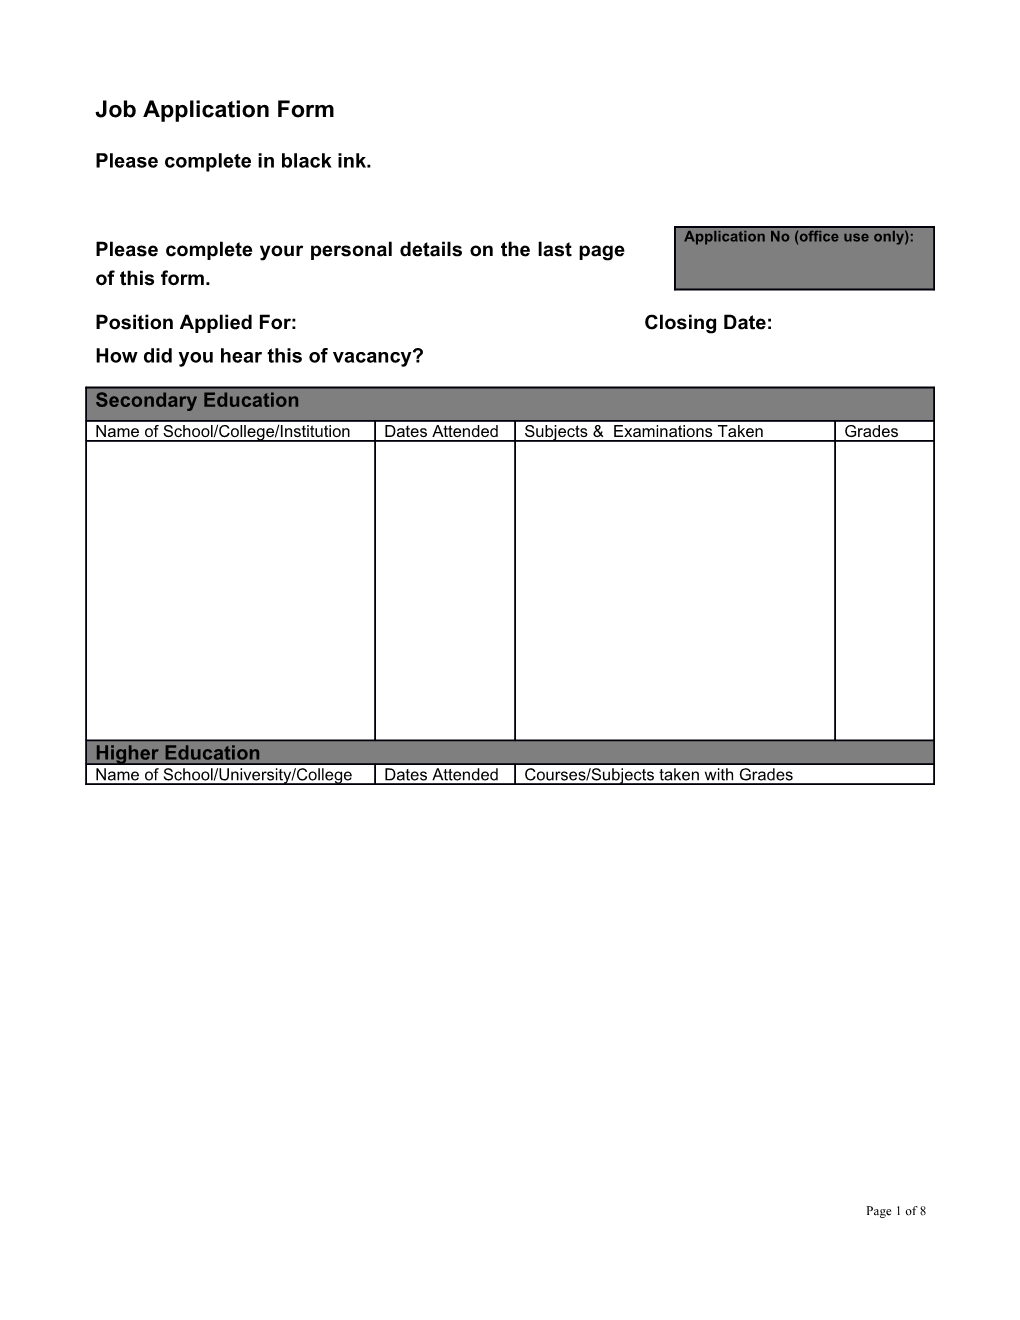 DSS Job Application Form